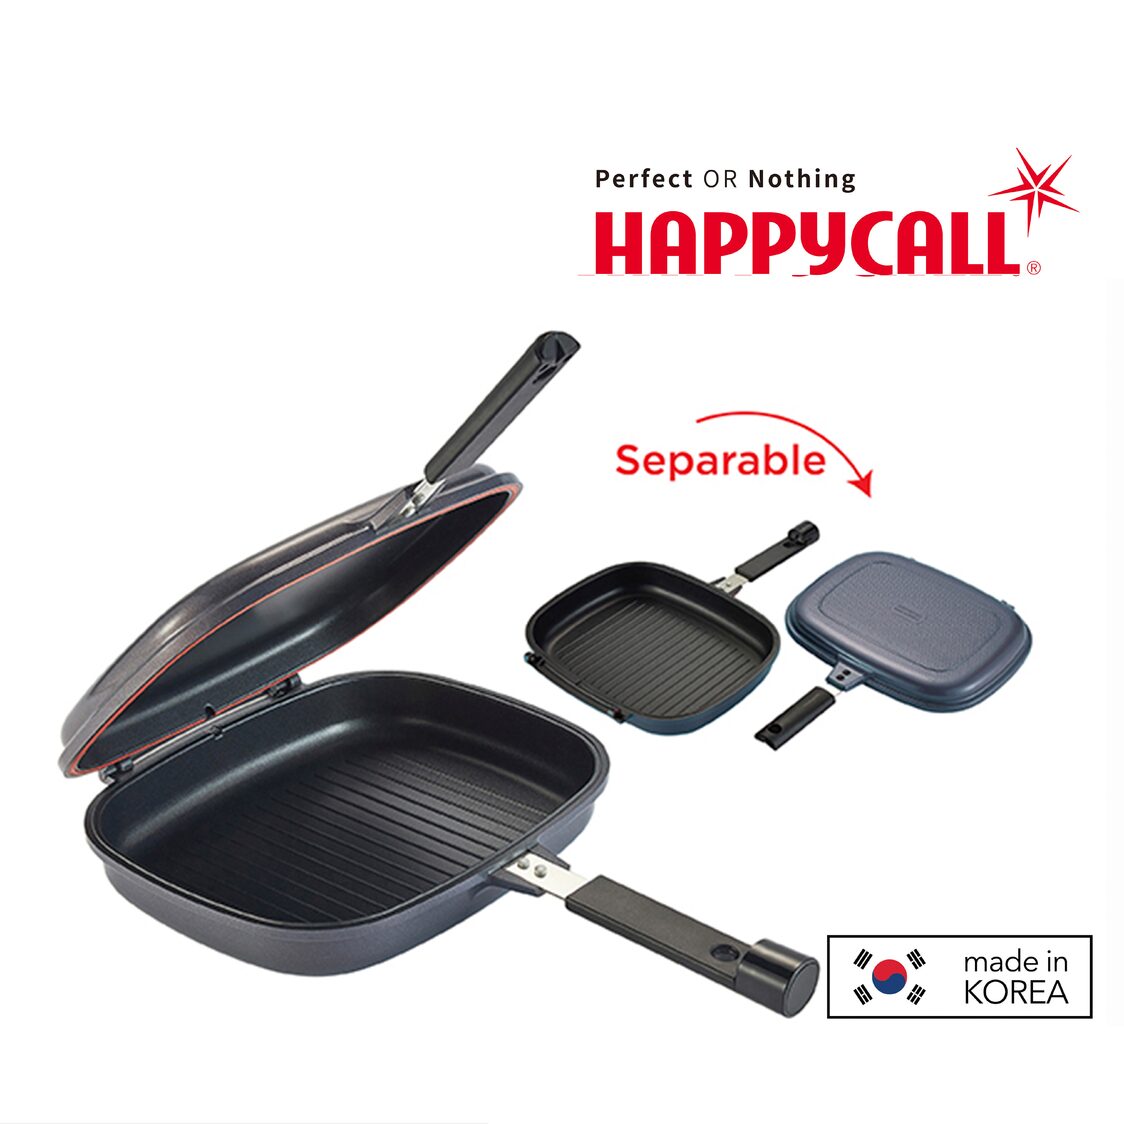 Happycall pan